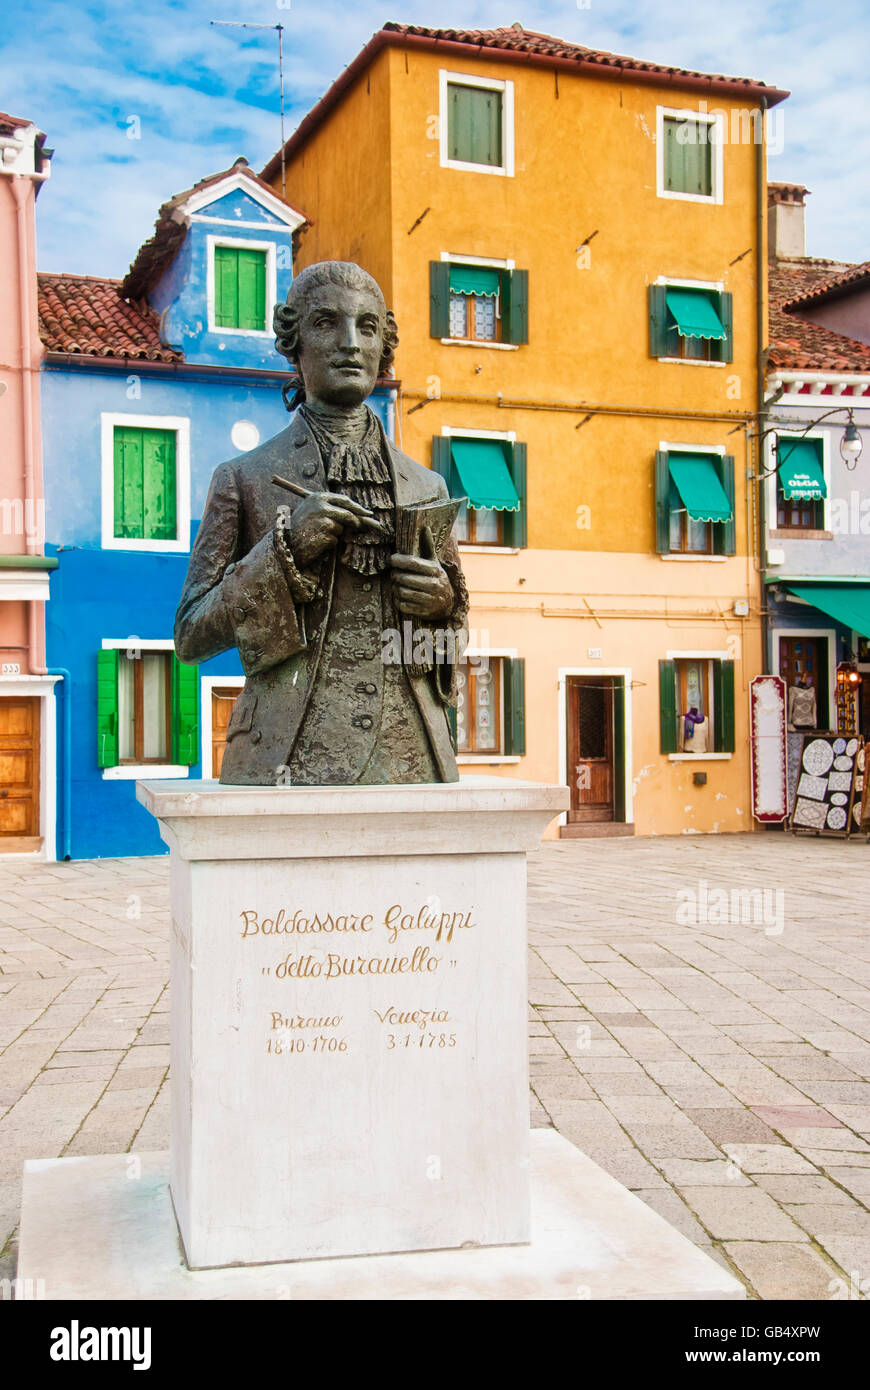 Monument to Baldassare Galuppi, Burano, Venice, Italy, Europa Stock Photo